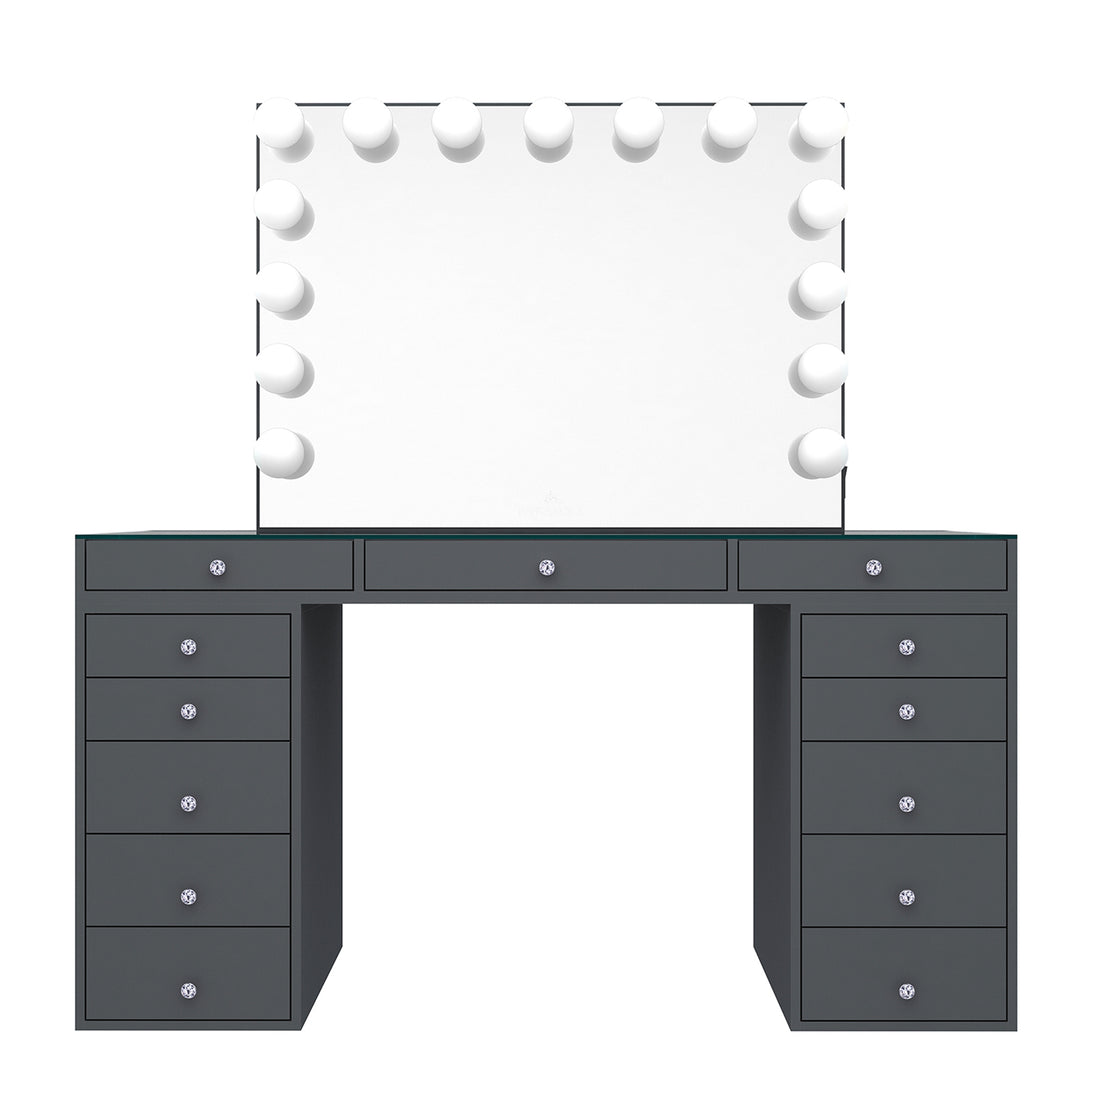 SlayStation® Pro 2.0 Tabletop + Vanity Mirror + 5 Drawer Units Bundle